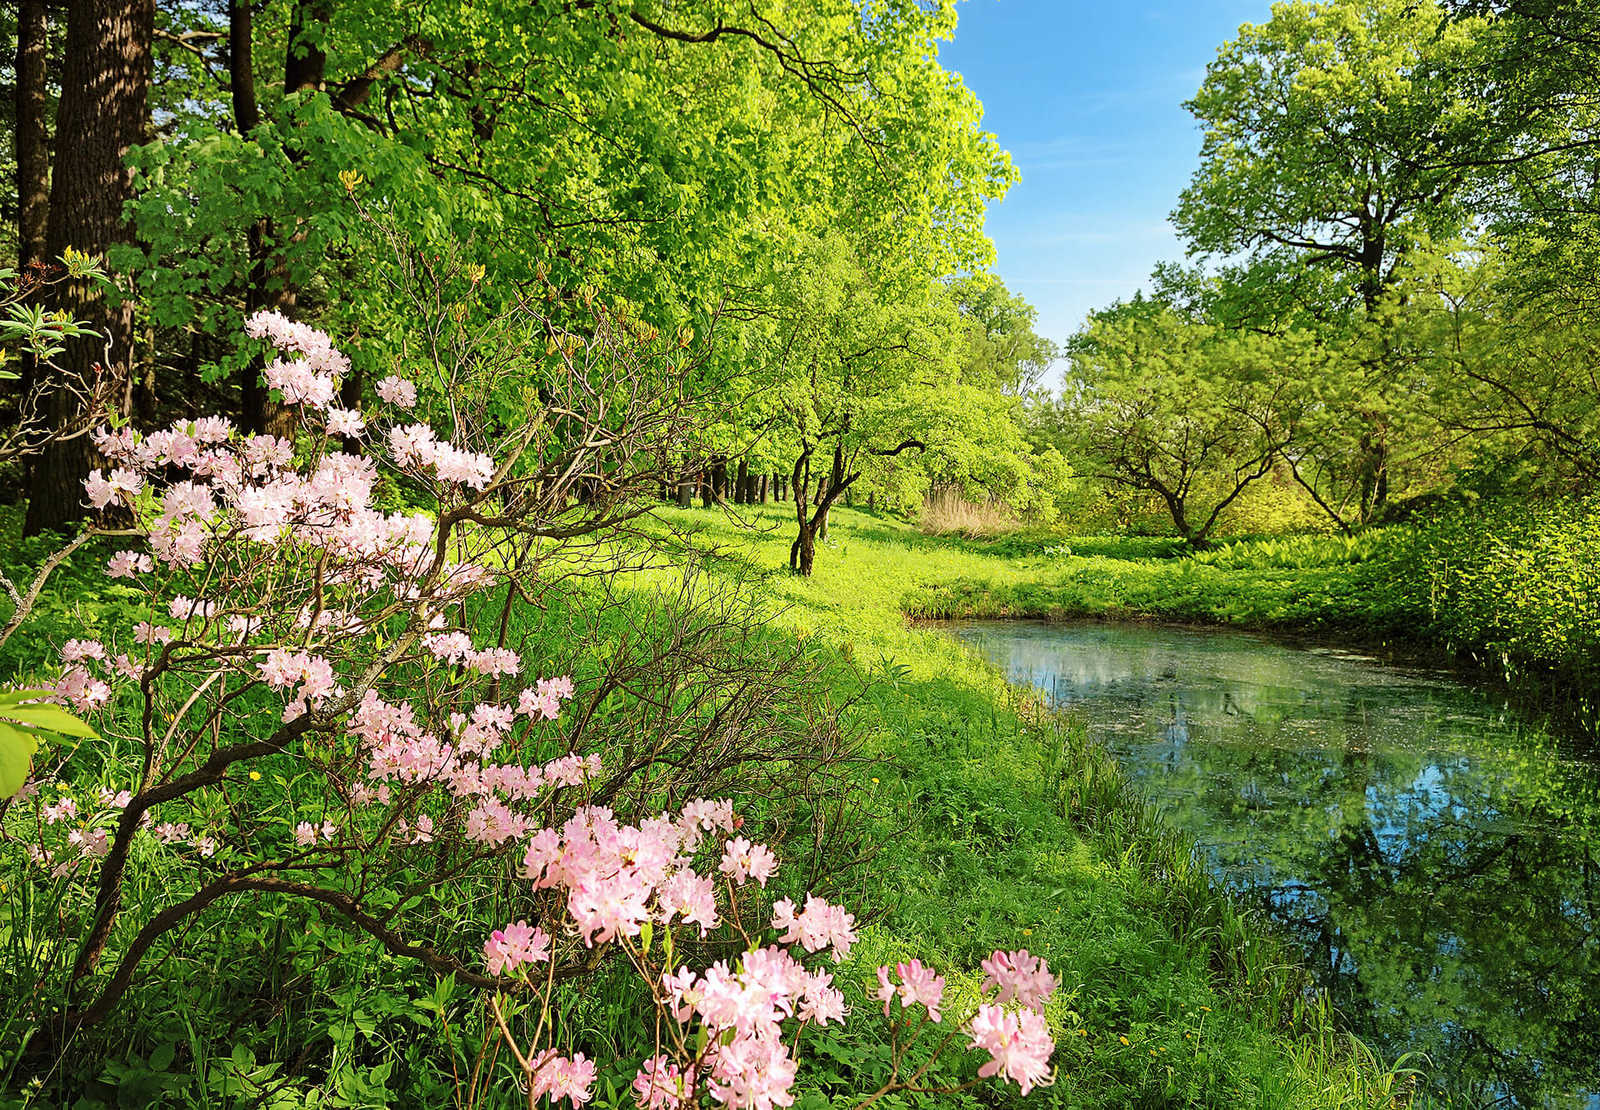         Photo wallpaper landscape in spring, nature shot
    